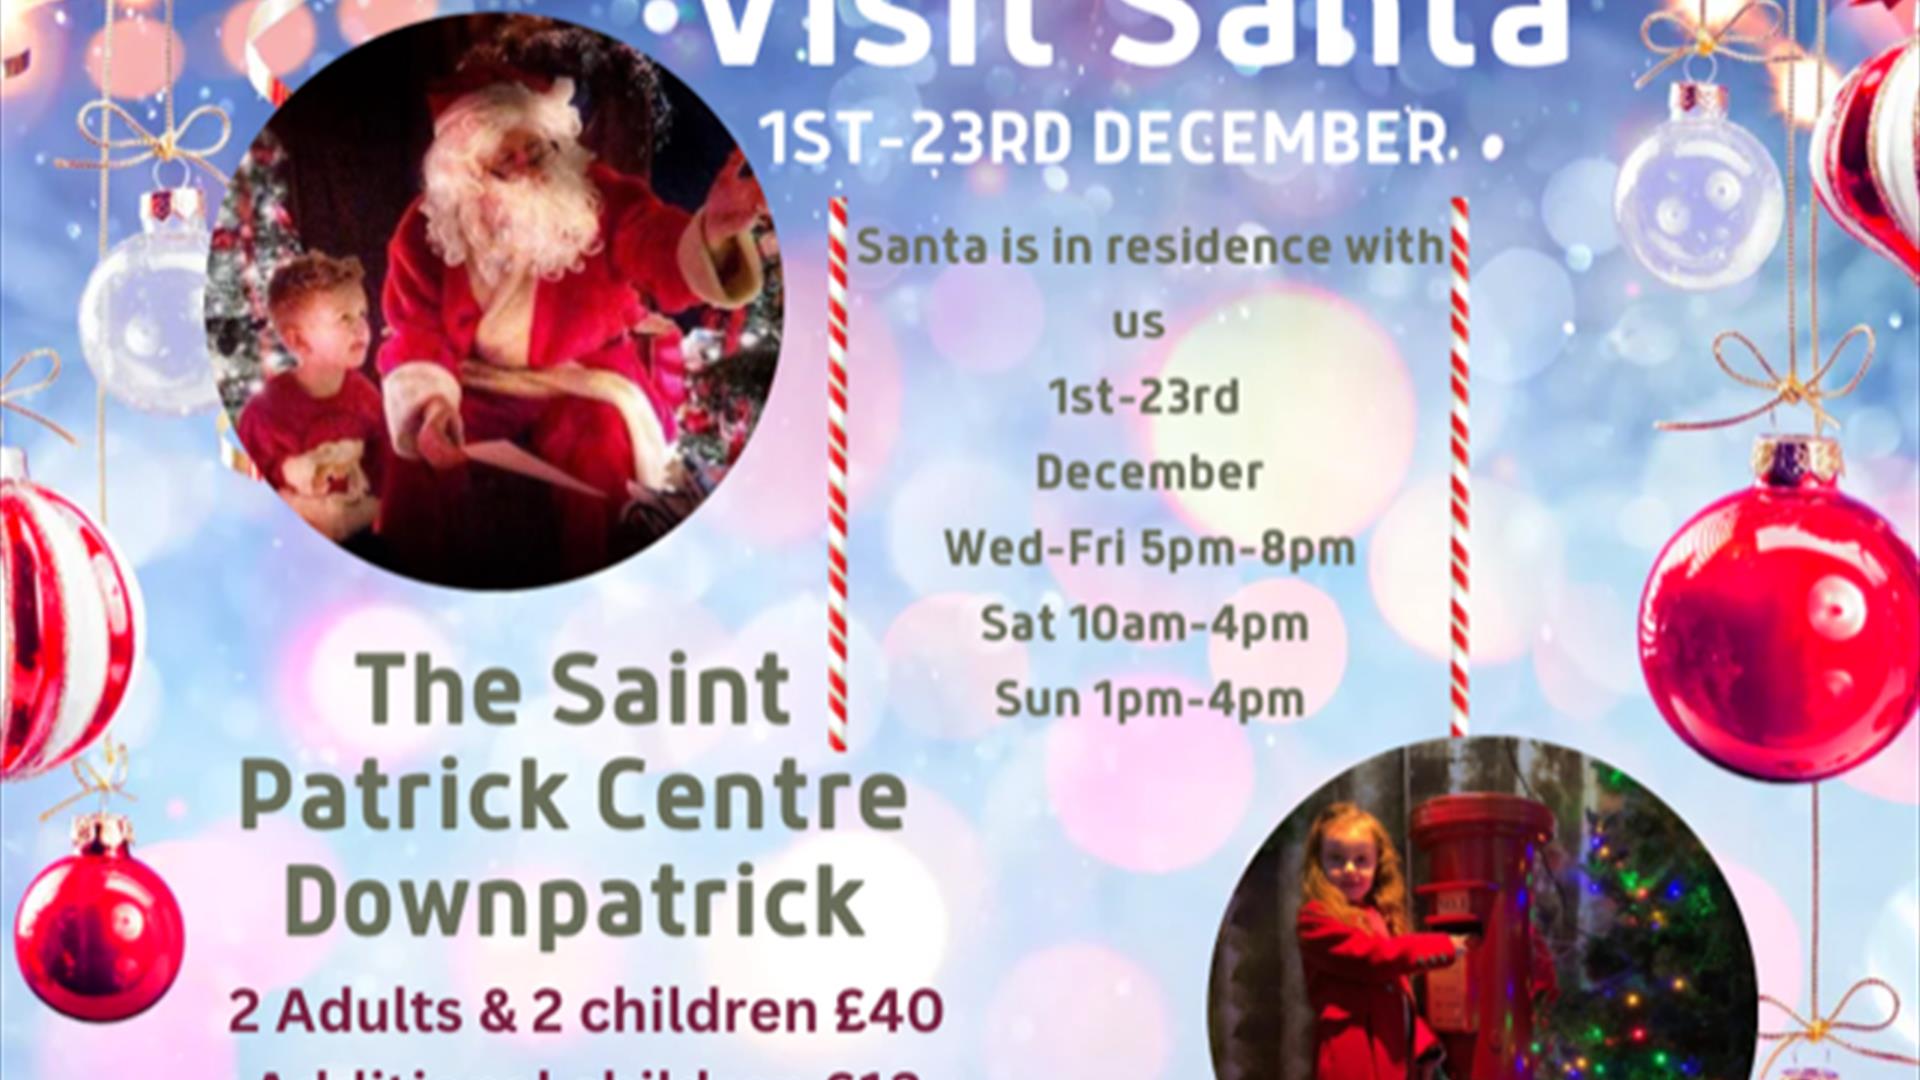 Poster for Visit Santa